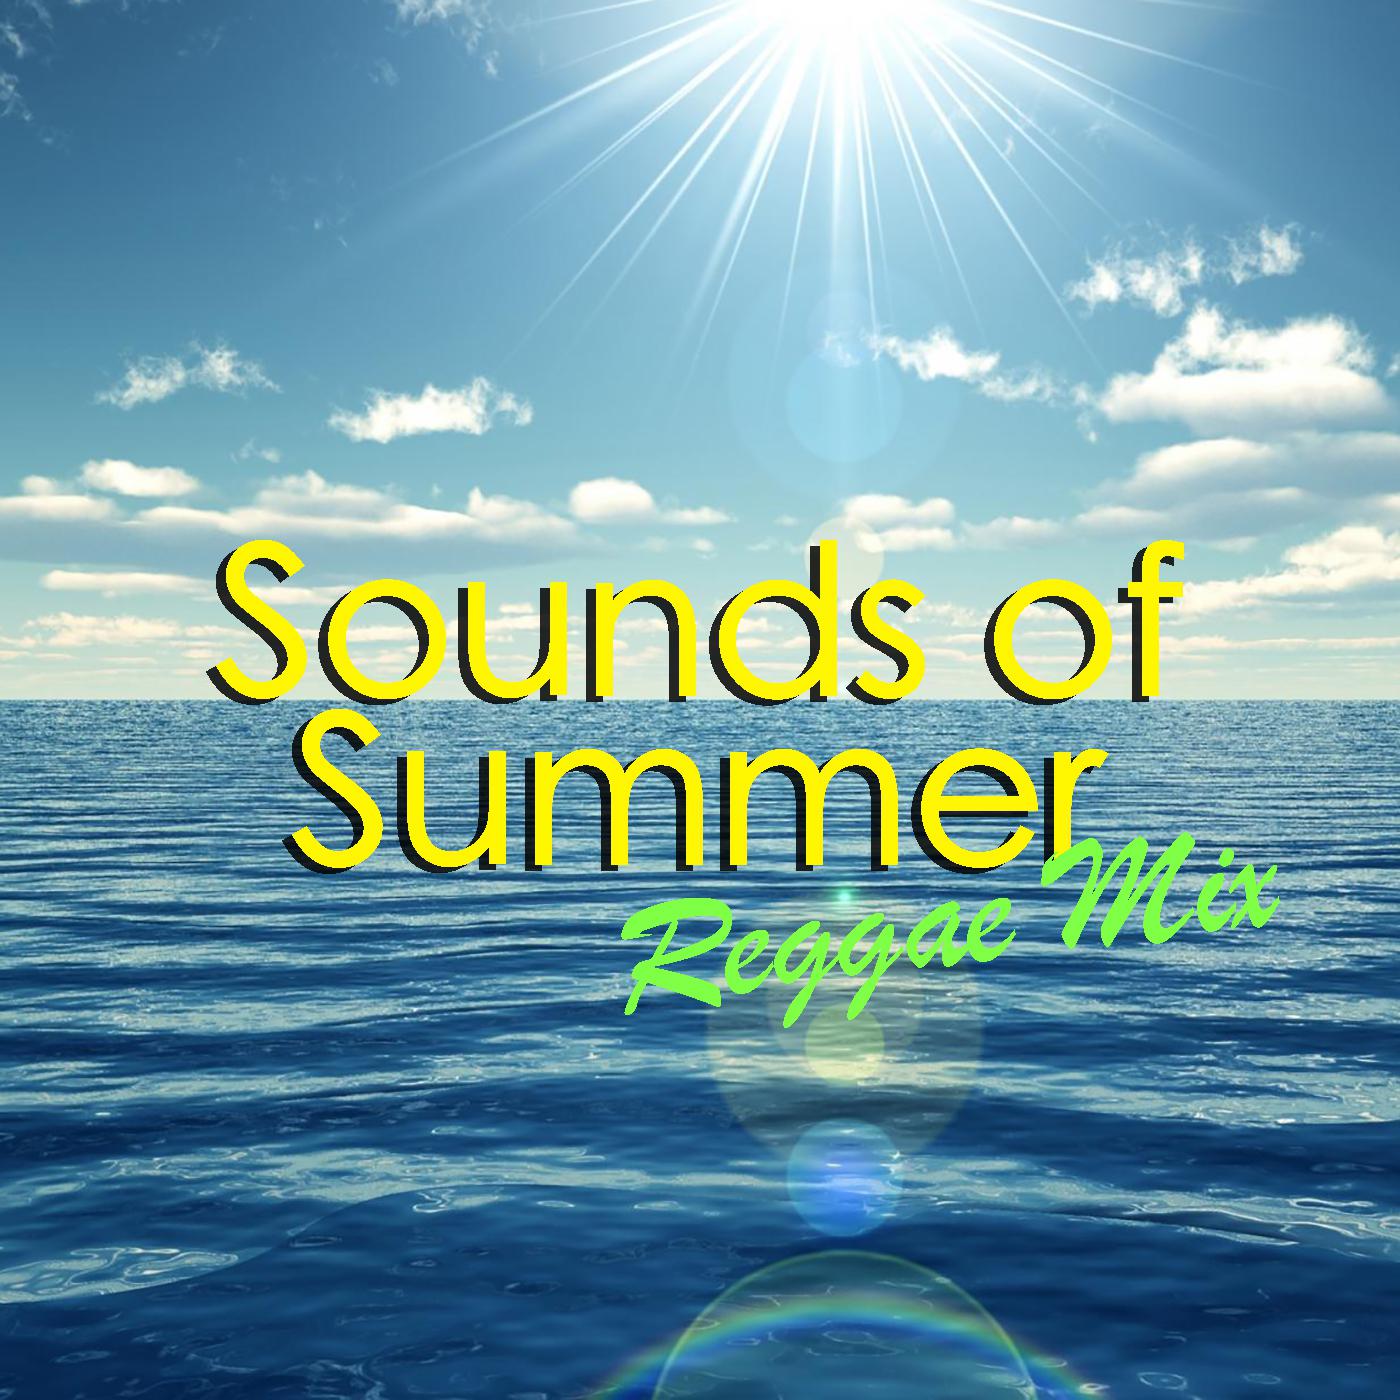 Sounds Of Summer Reggae Mix